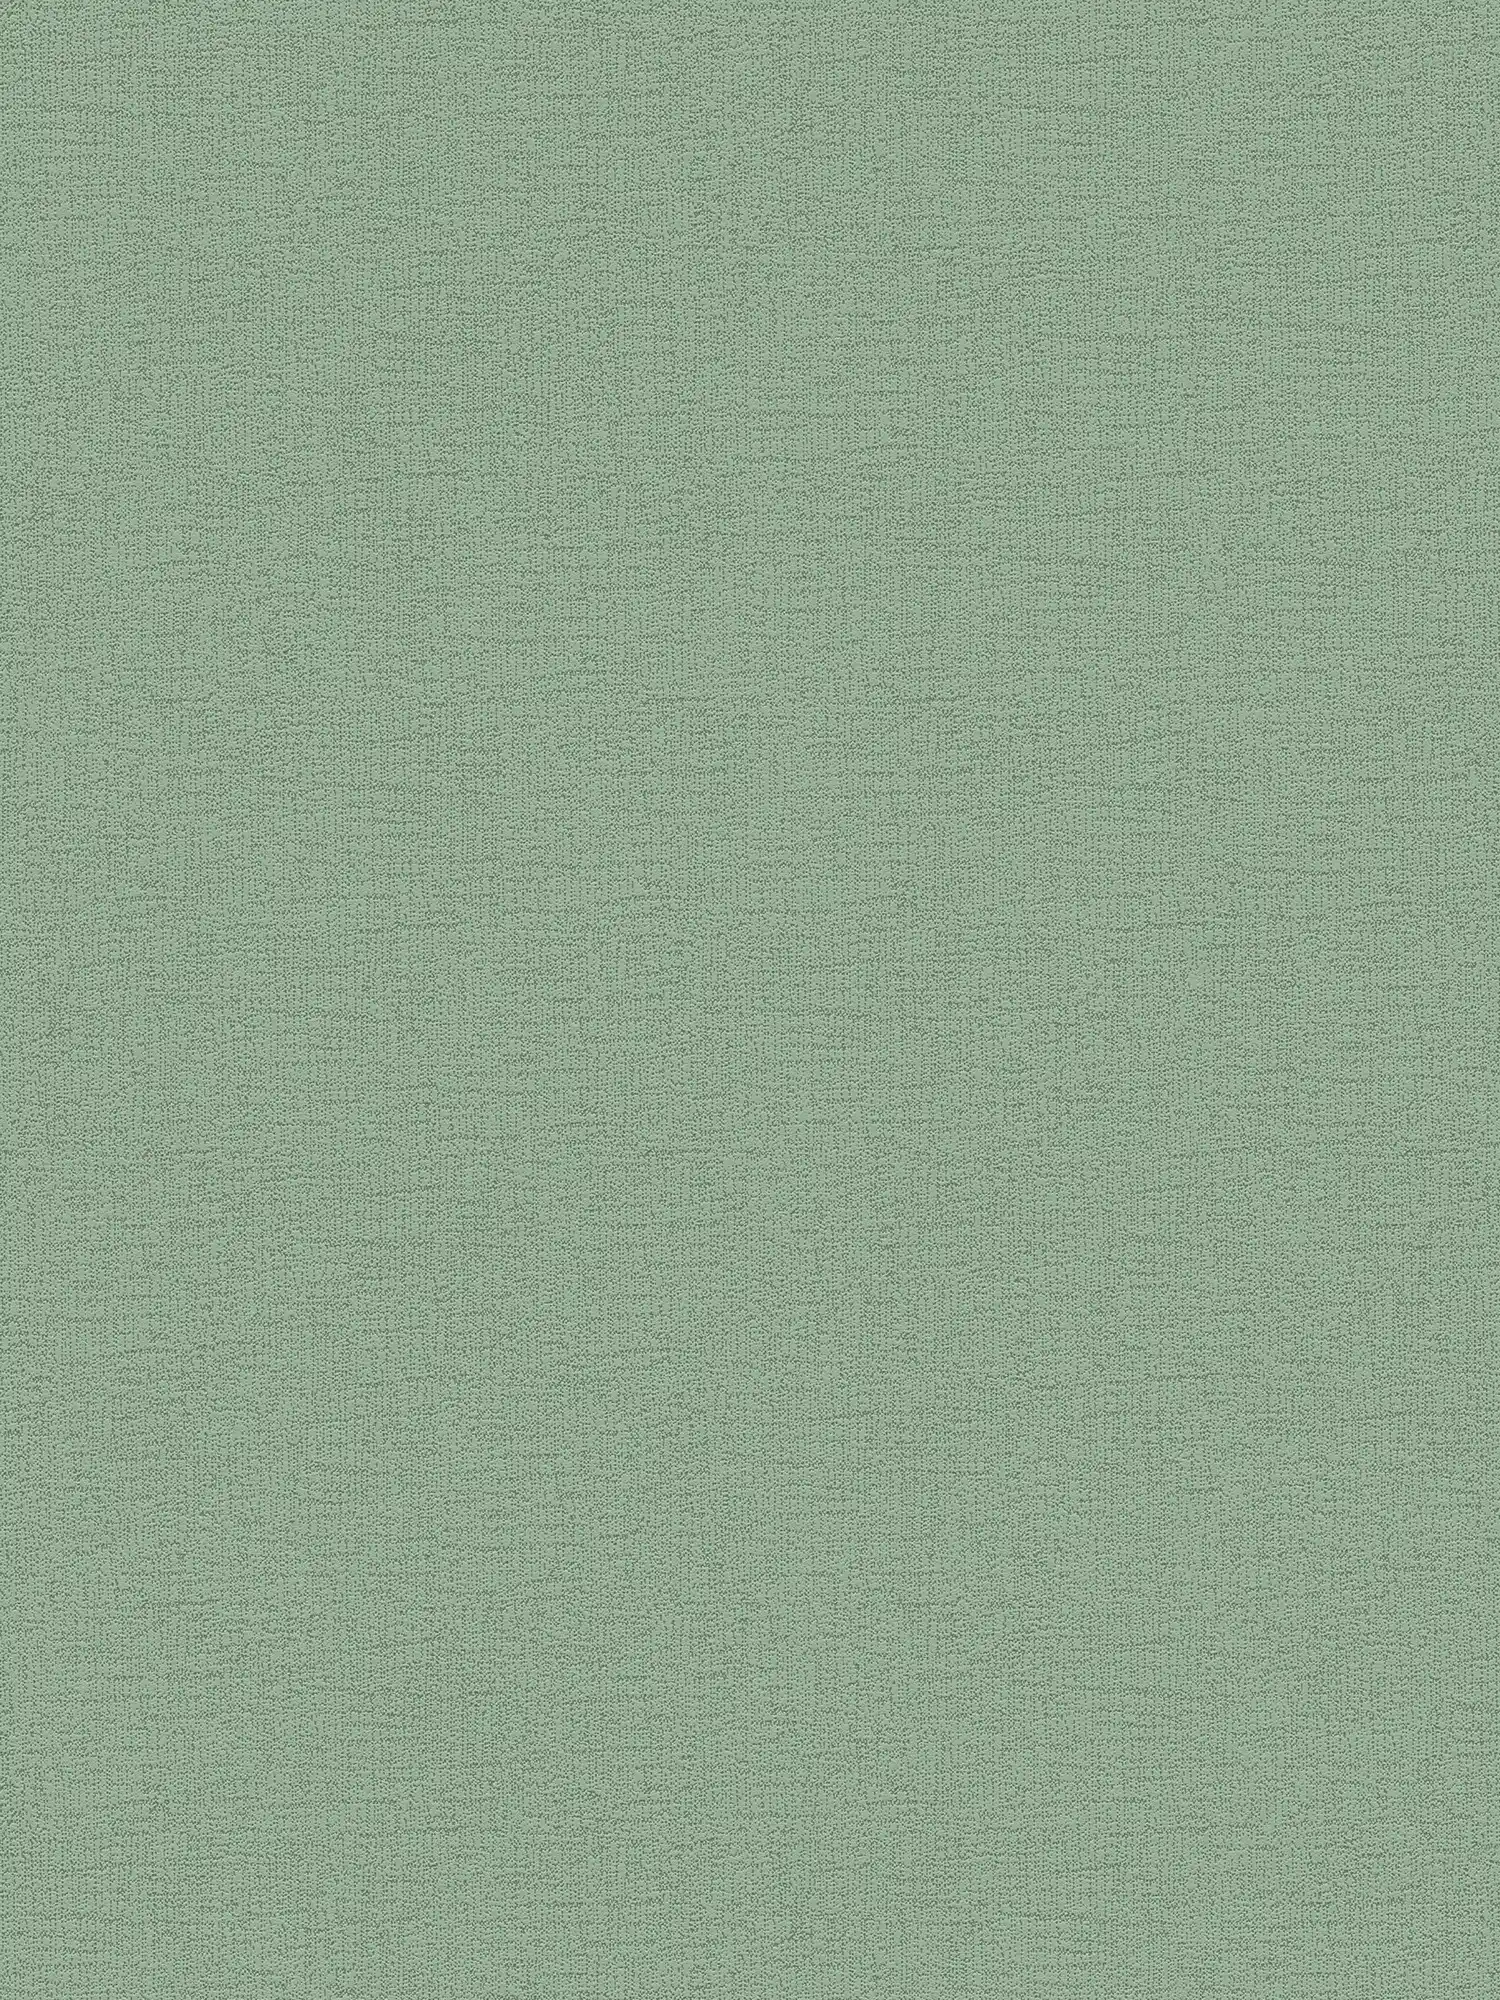 Non-woven wallpaper plain moss green with textured pattern - green
